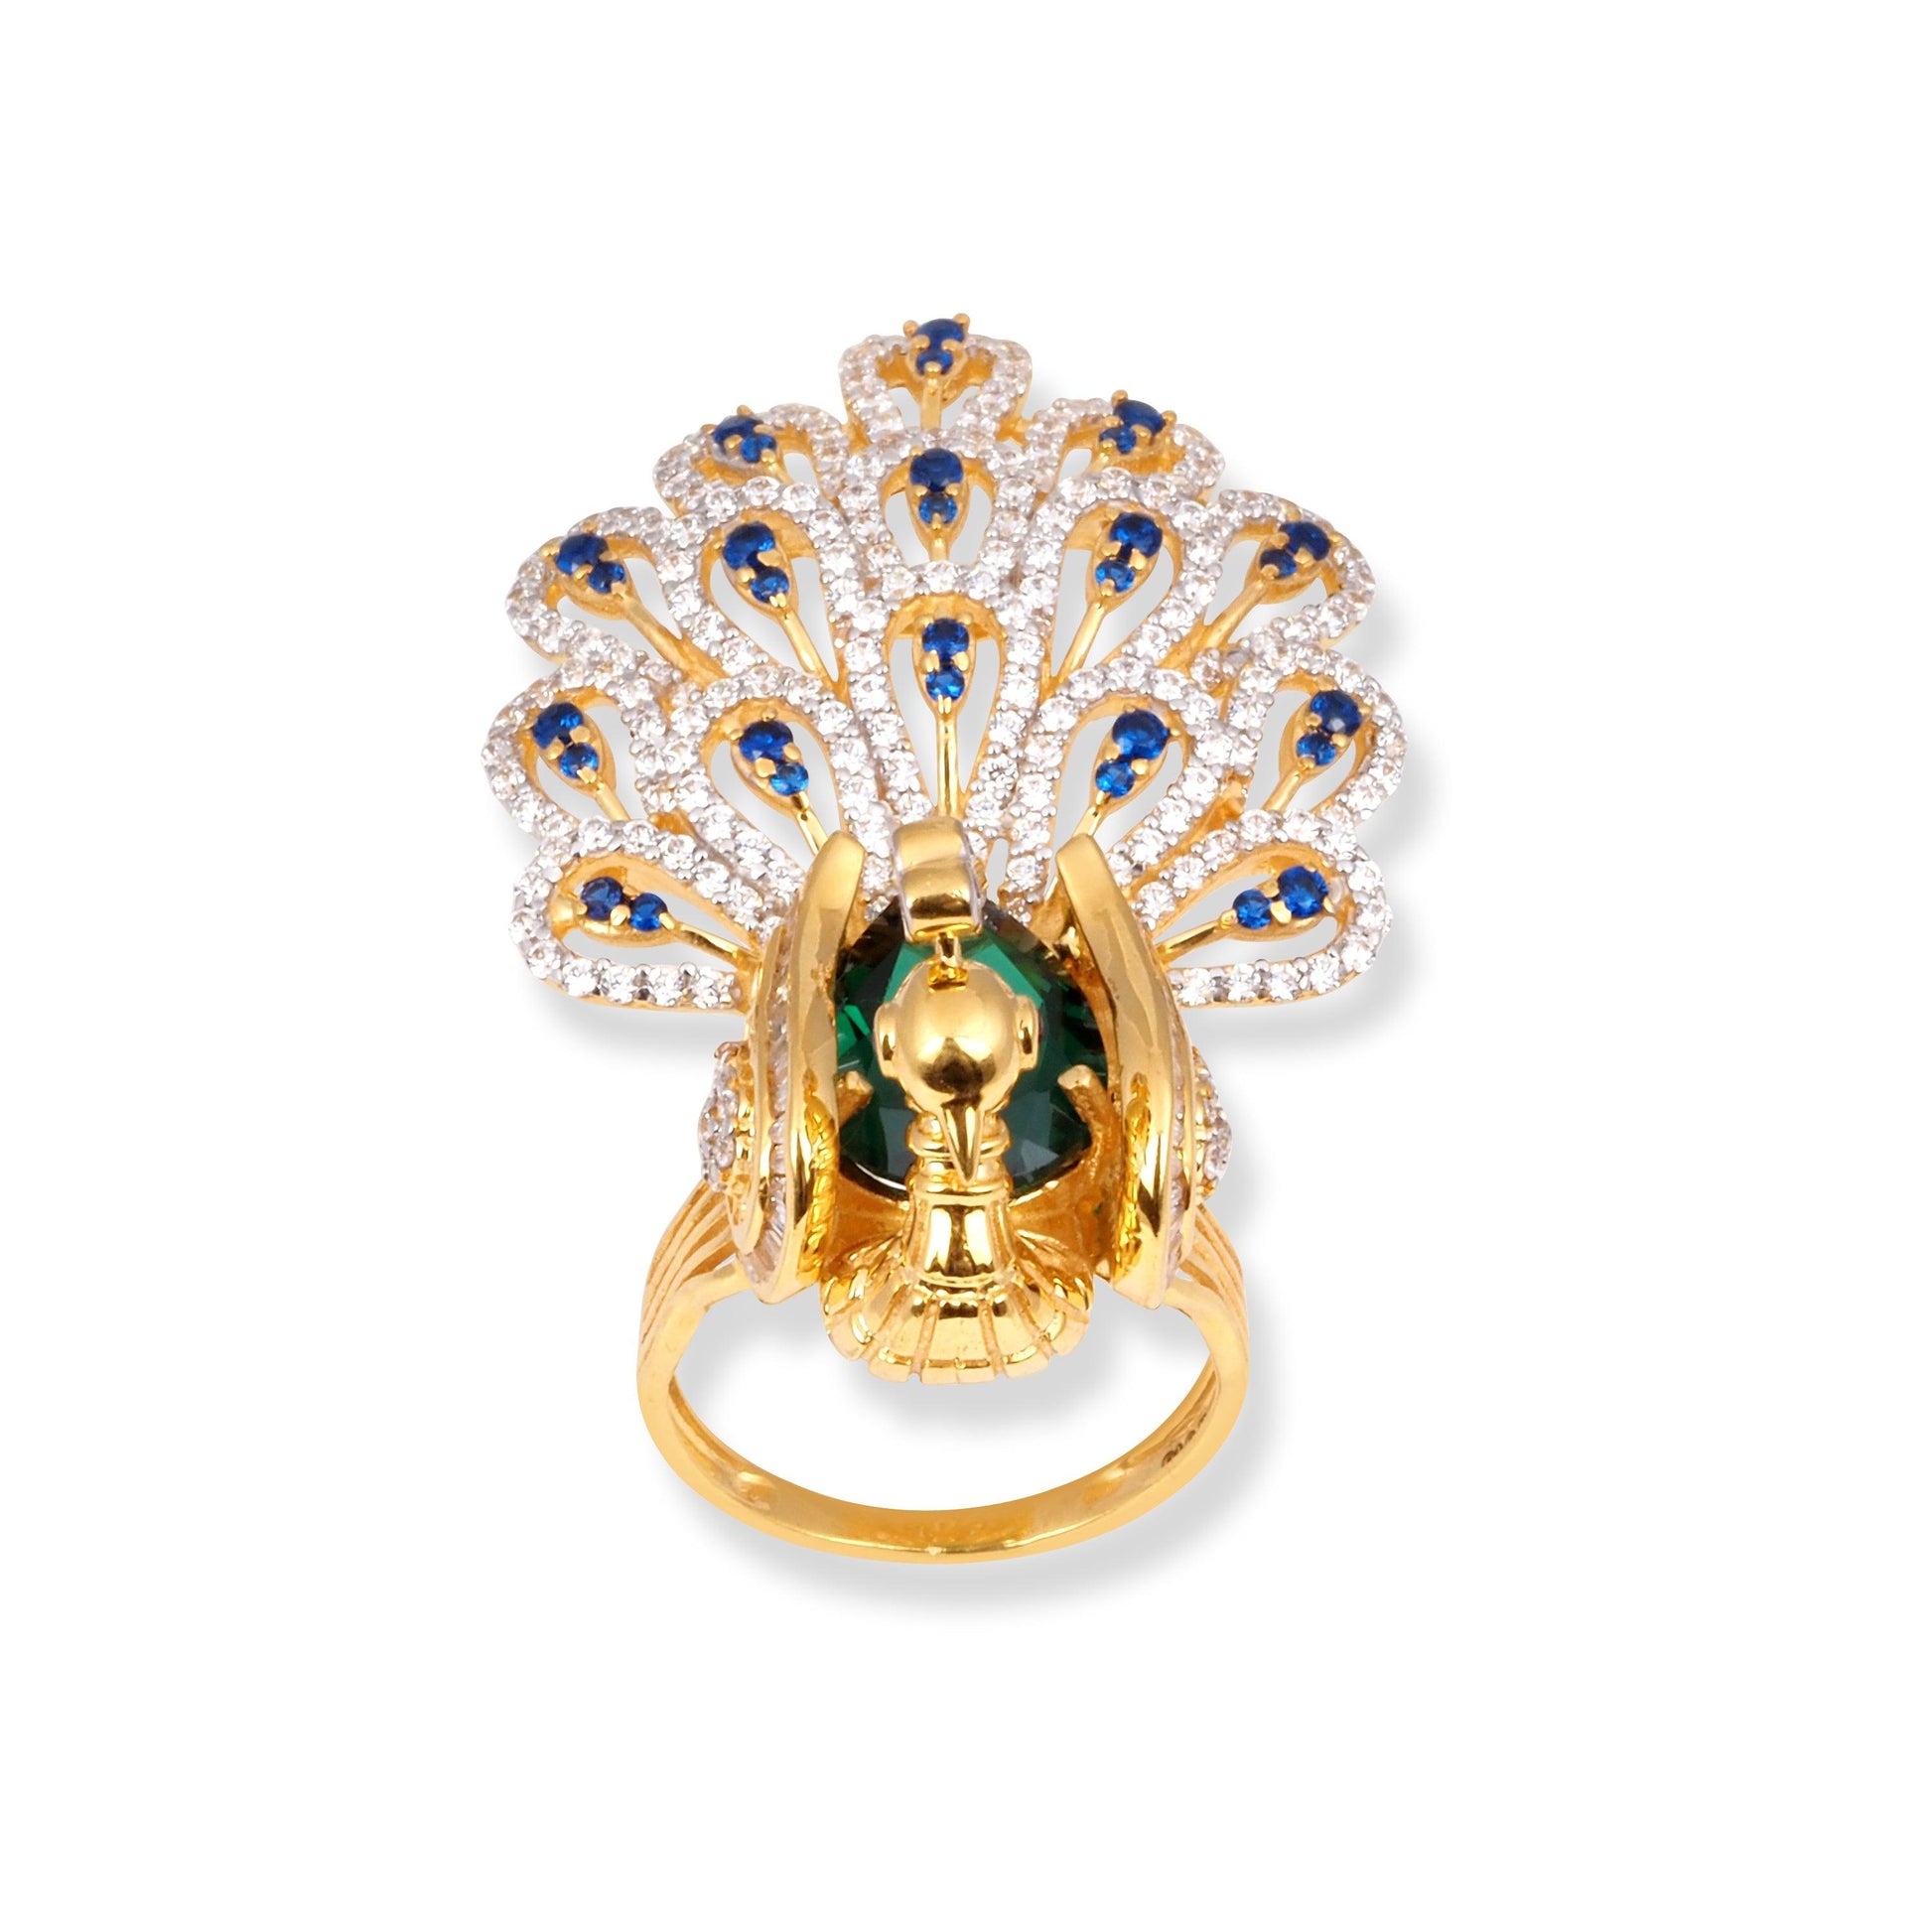 22ct Gold Peacock Design Cocktail Ring with Swarovski Zirconia Stones LR-7029 - Minar Jewellers